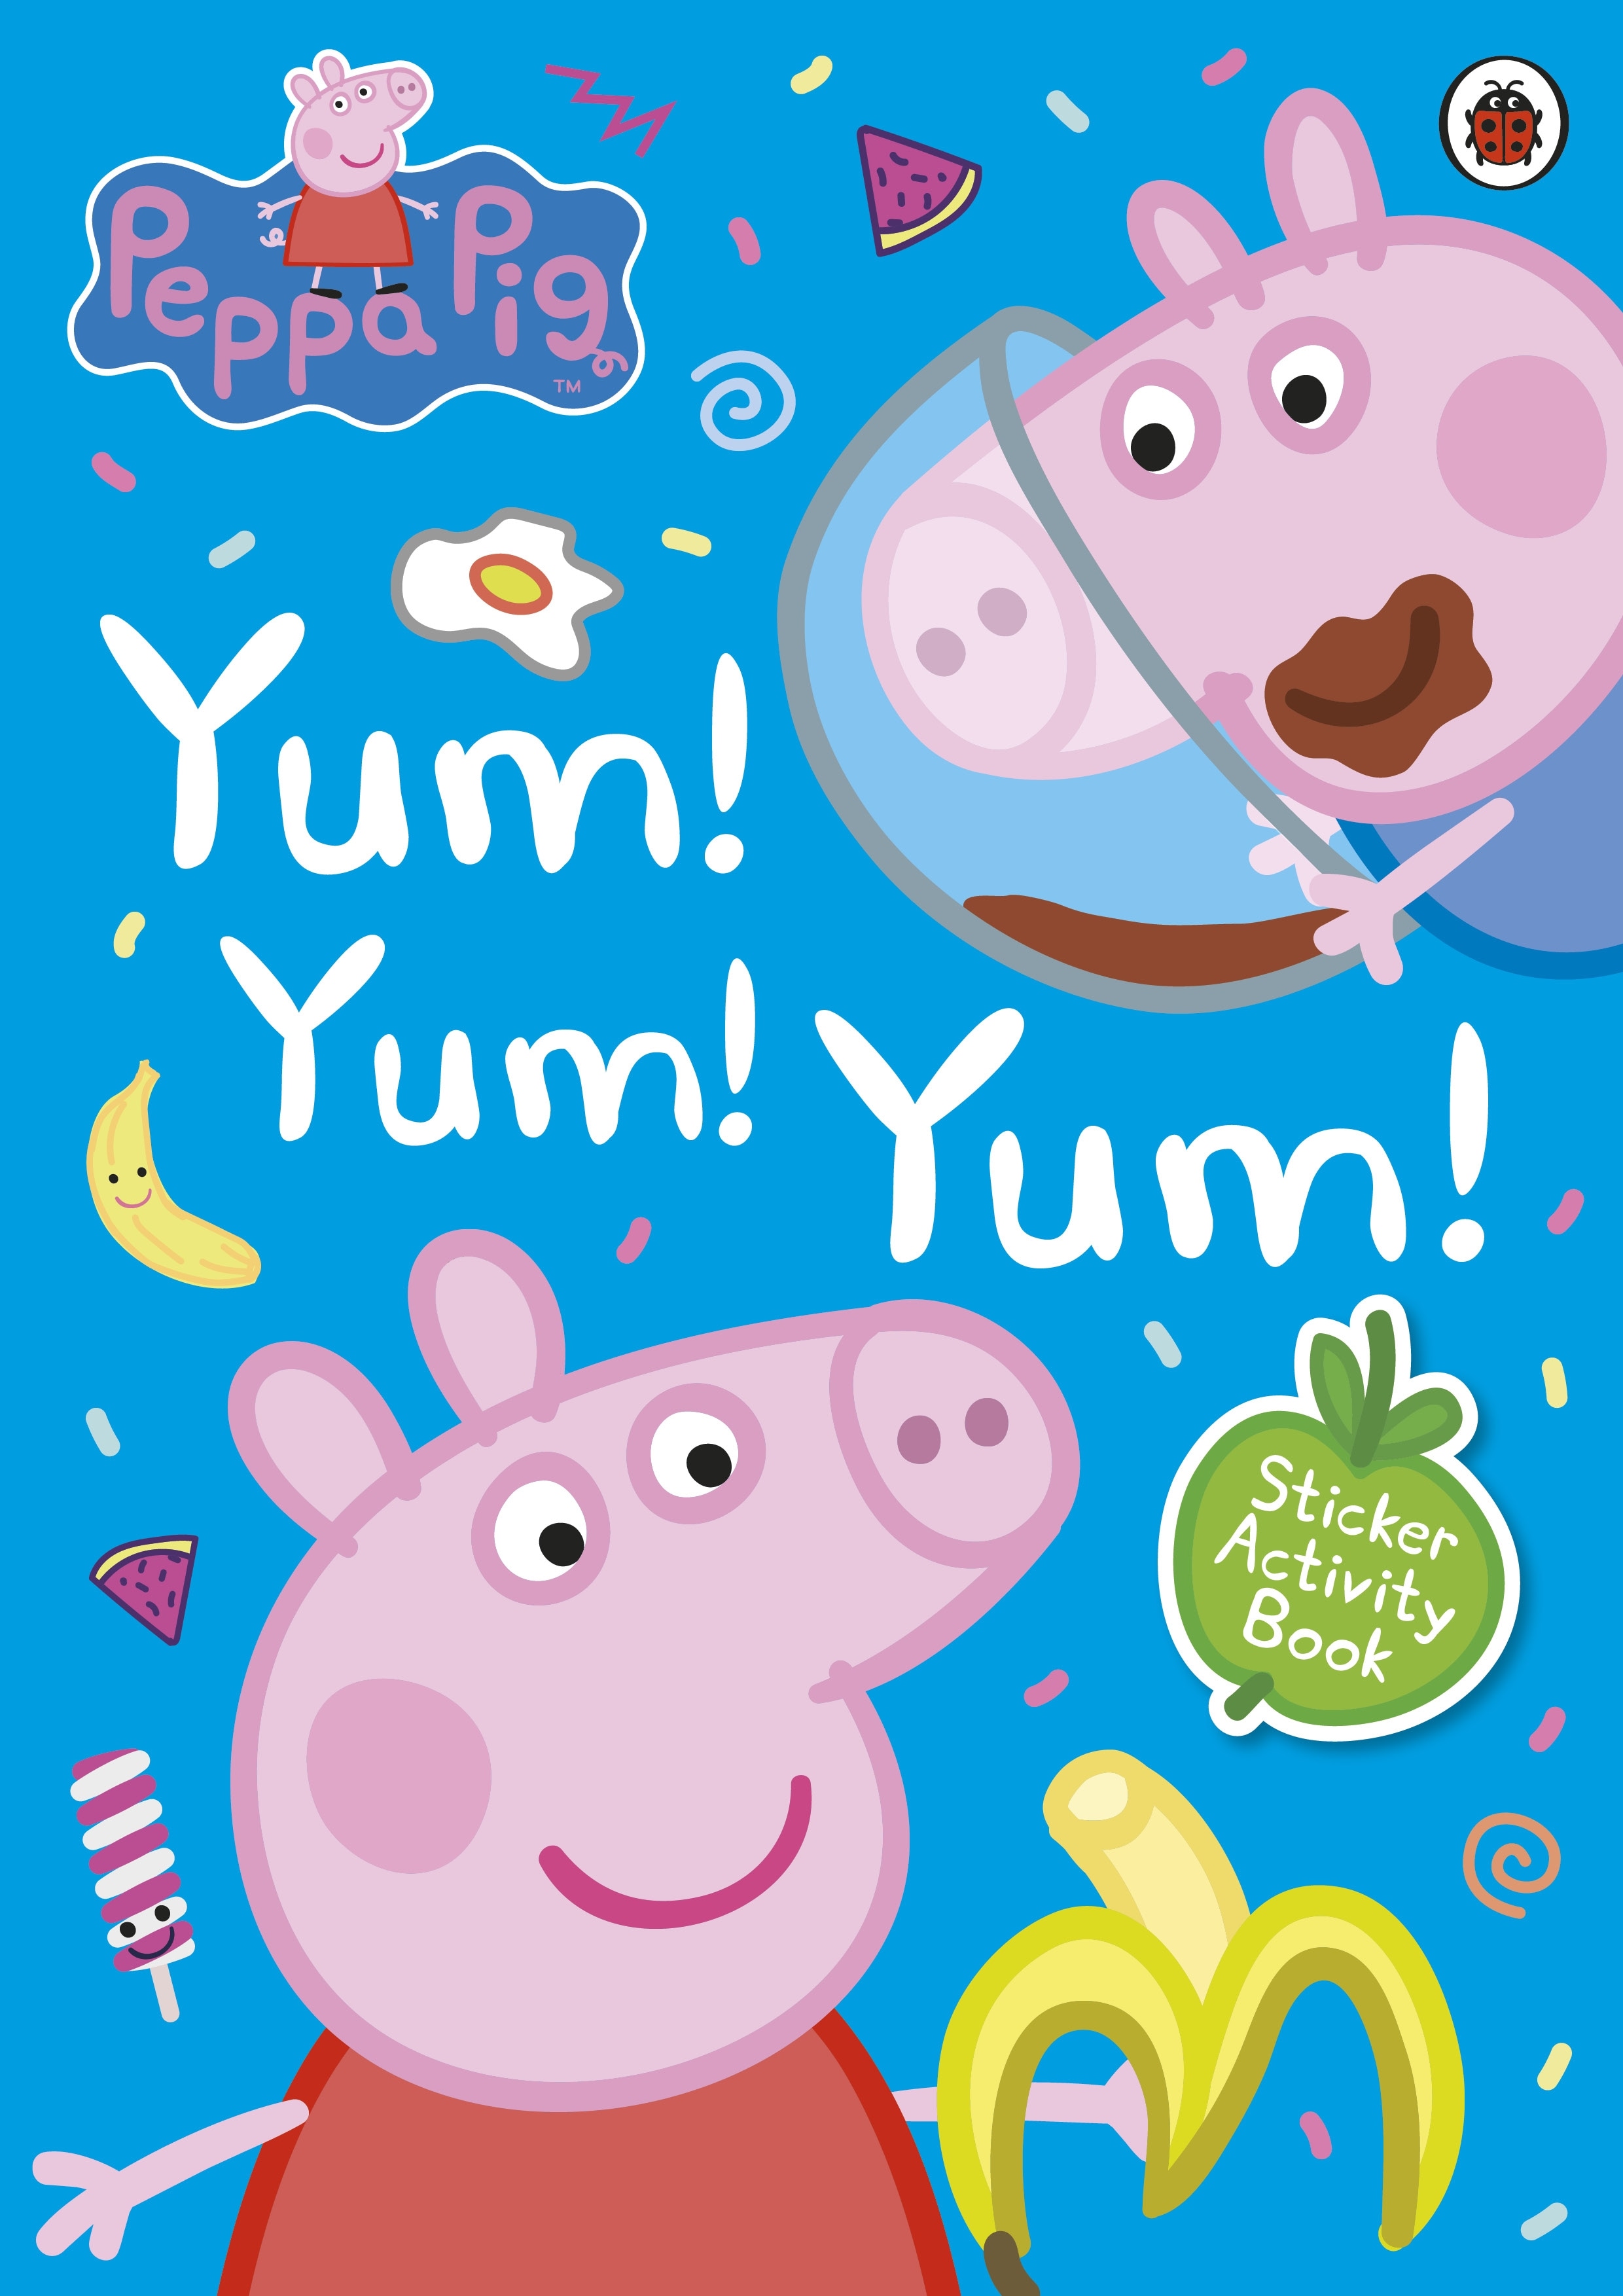 Book “Peppa Pig: Yum! Yum! Yum! Sticker Activity Book” by Peppa Pig — January 10, 2019